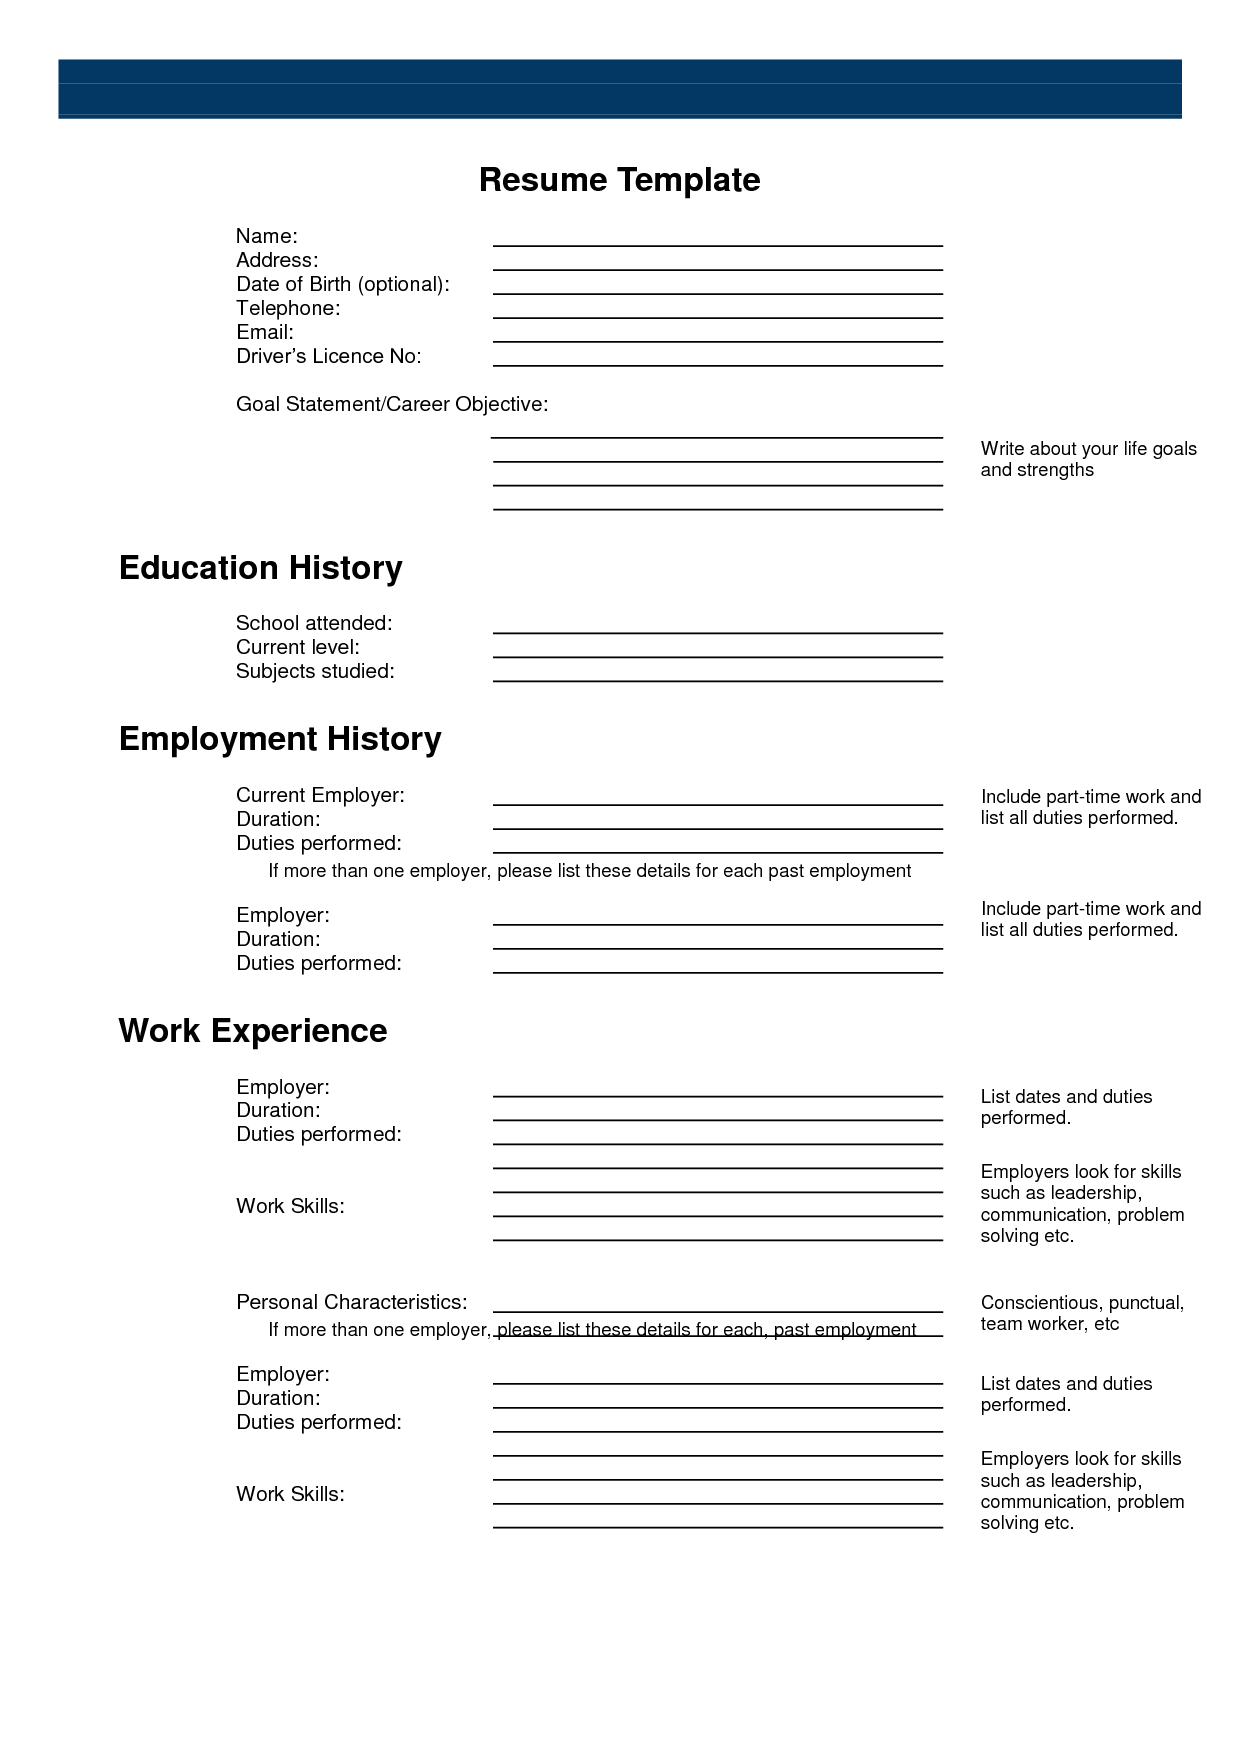 Free Printable Sample Resume Templates Httpwwwresumecareer Free - Free Printable Fill In The Blank Resume Templates